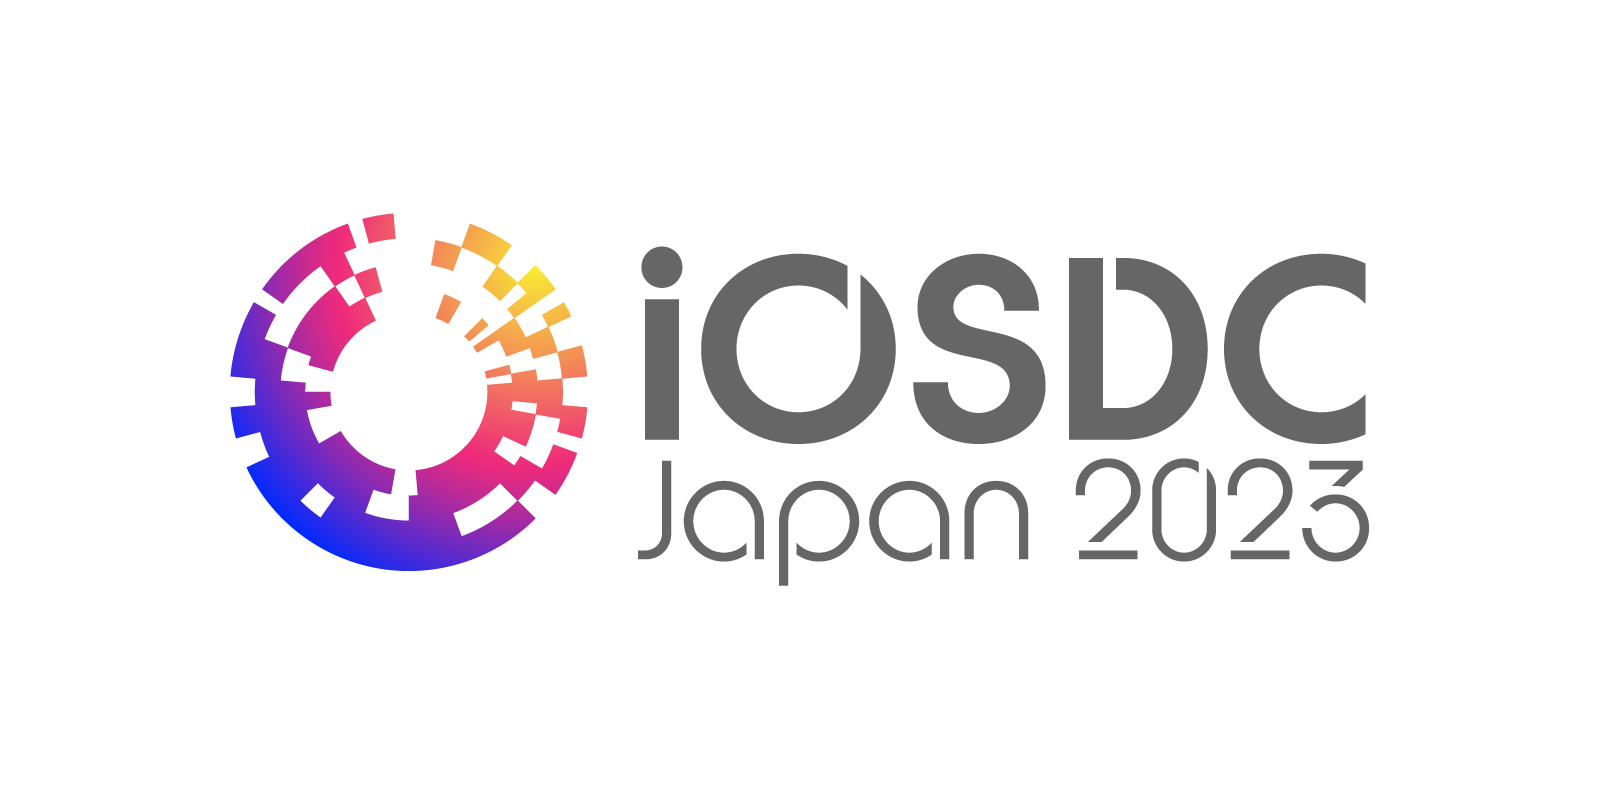 iOSDC Japan 2023 に参加します！